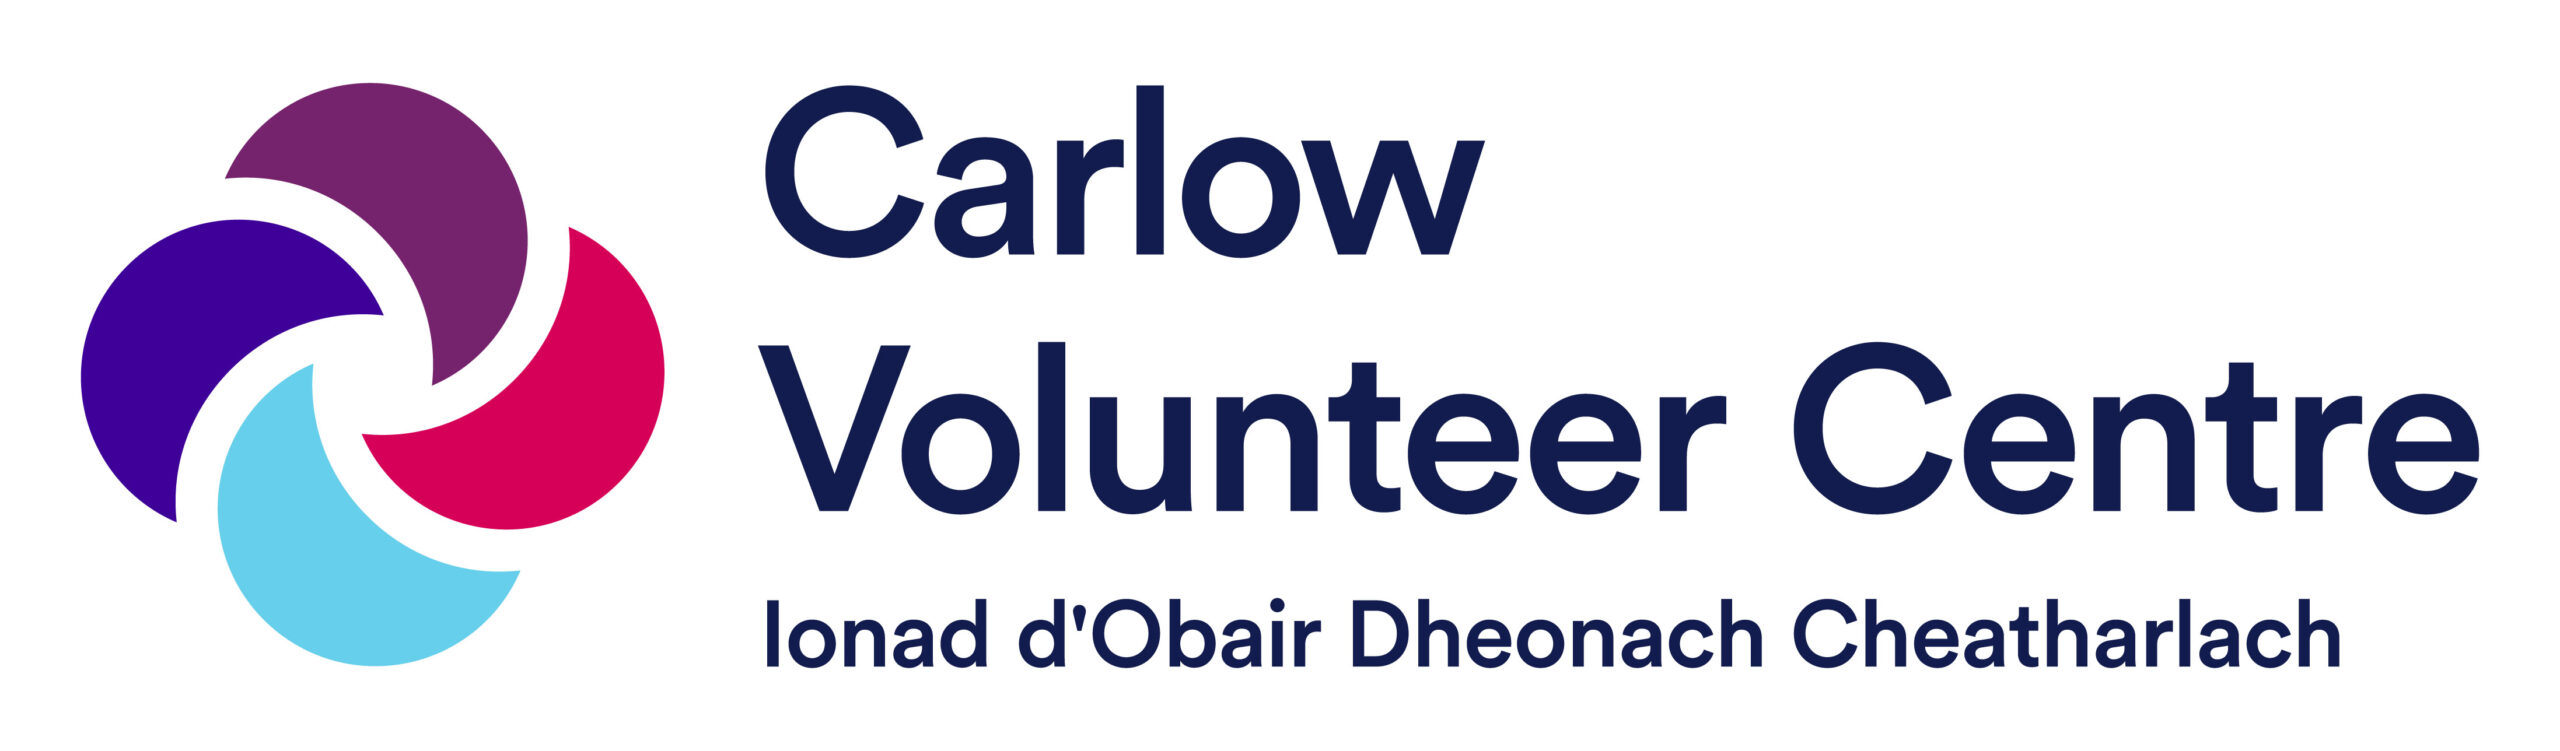 Carlow-Volunteer-Centre-Logo